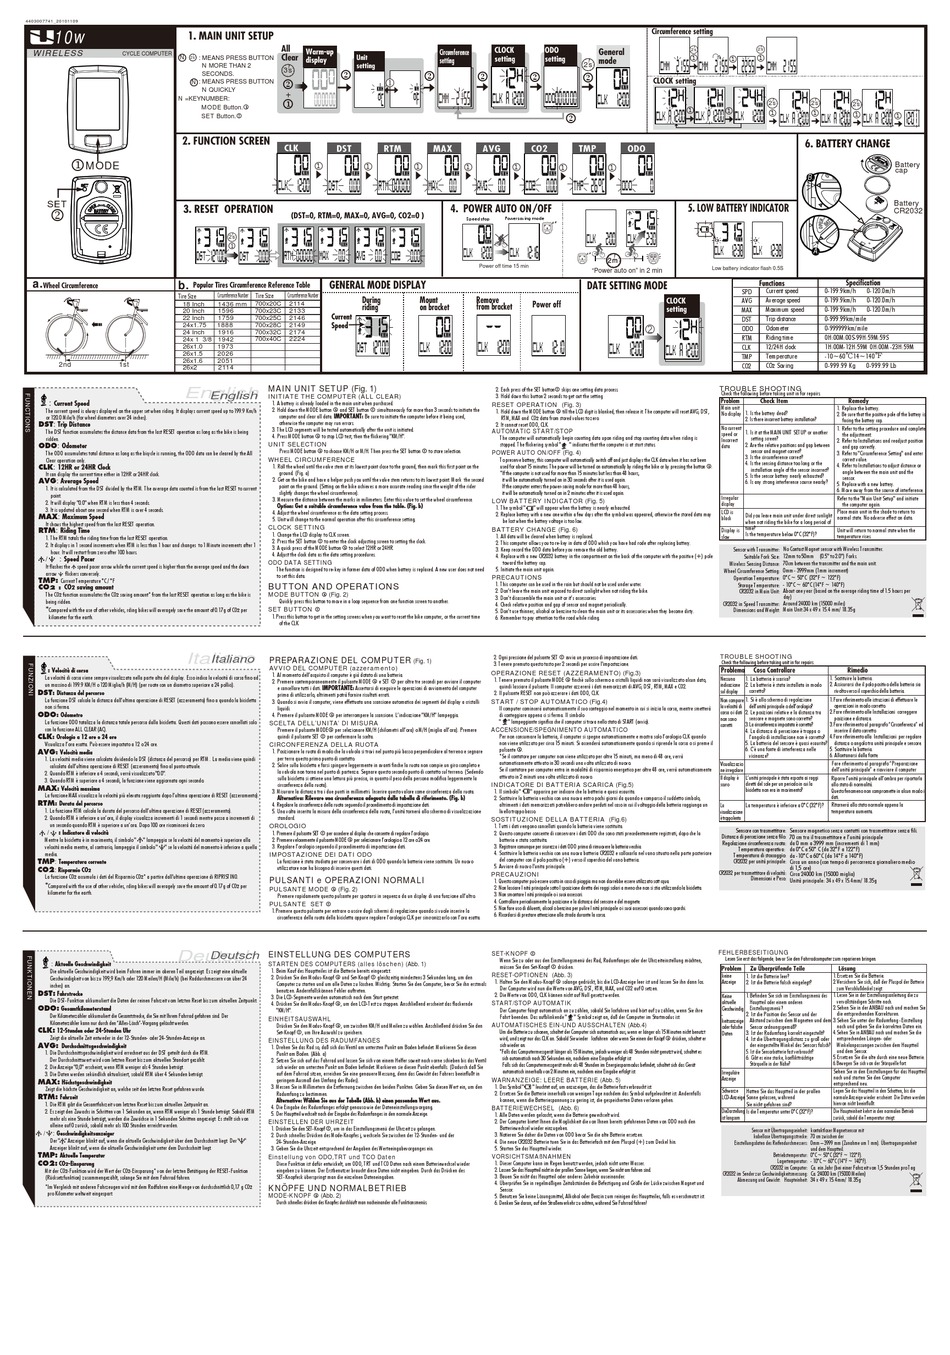 union 9wn cycle computer manual